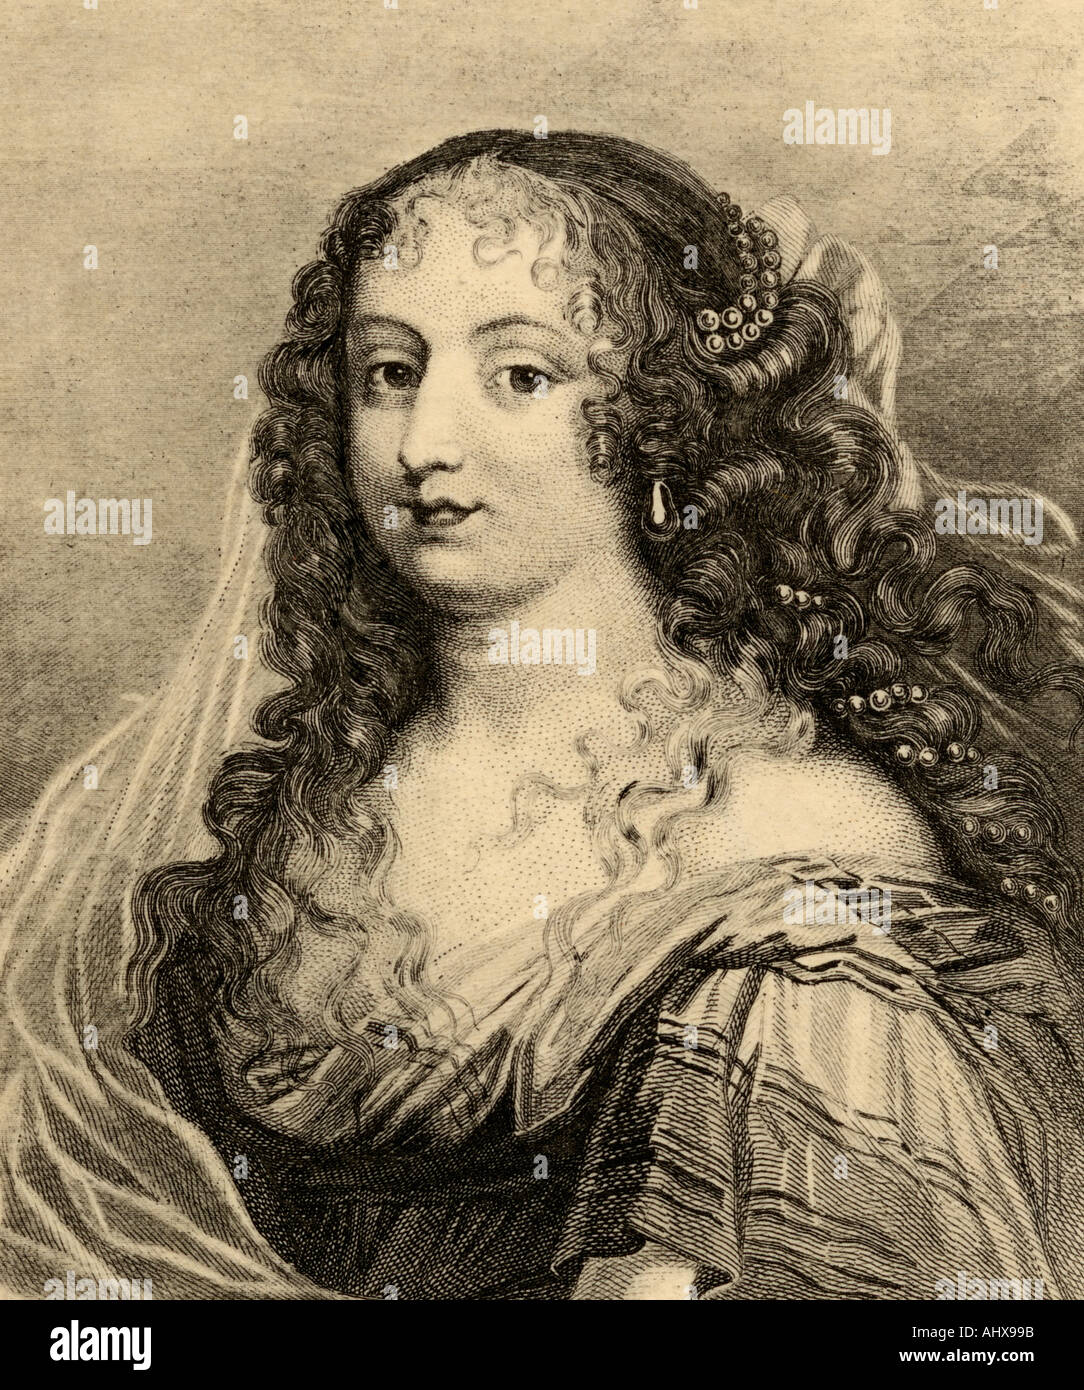 Marie de Rabutin-Chantal, marquise de Sevigne, 1626 - 1696. French aristocrat and writer. Stock Photo